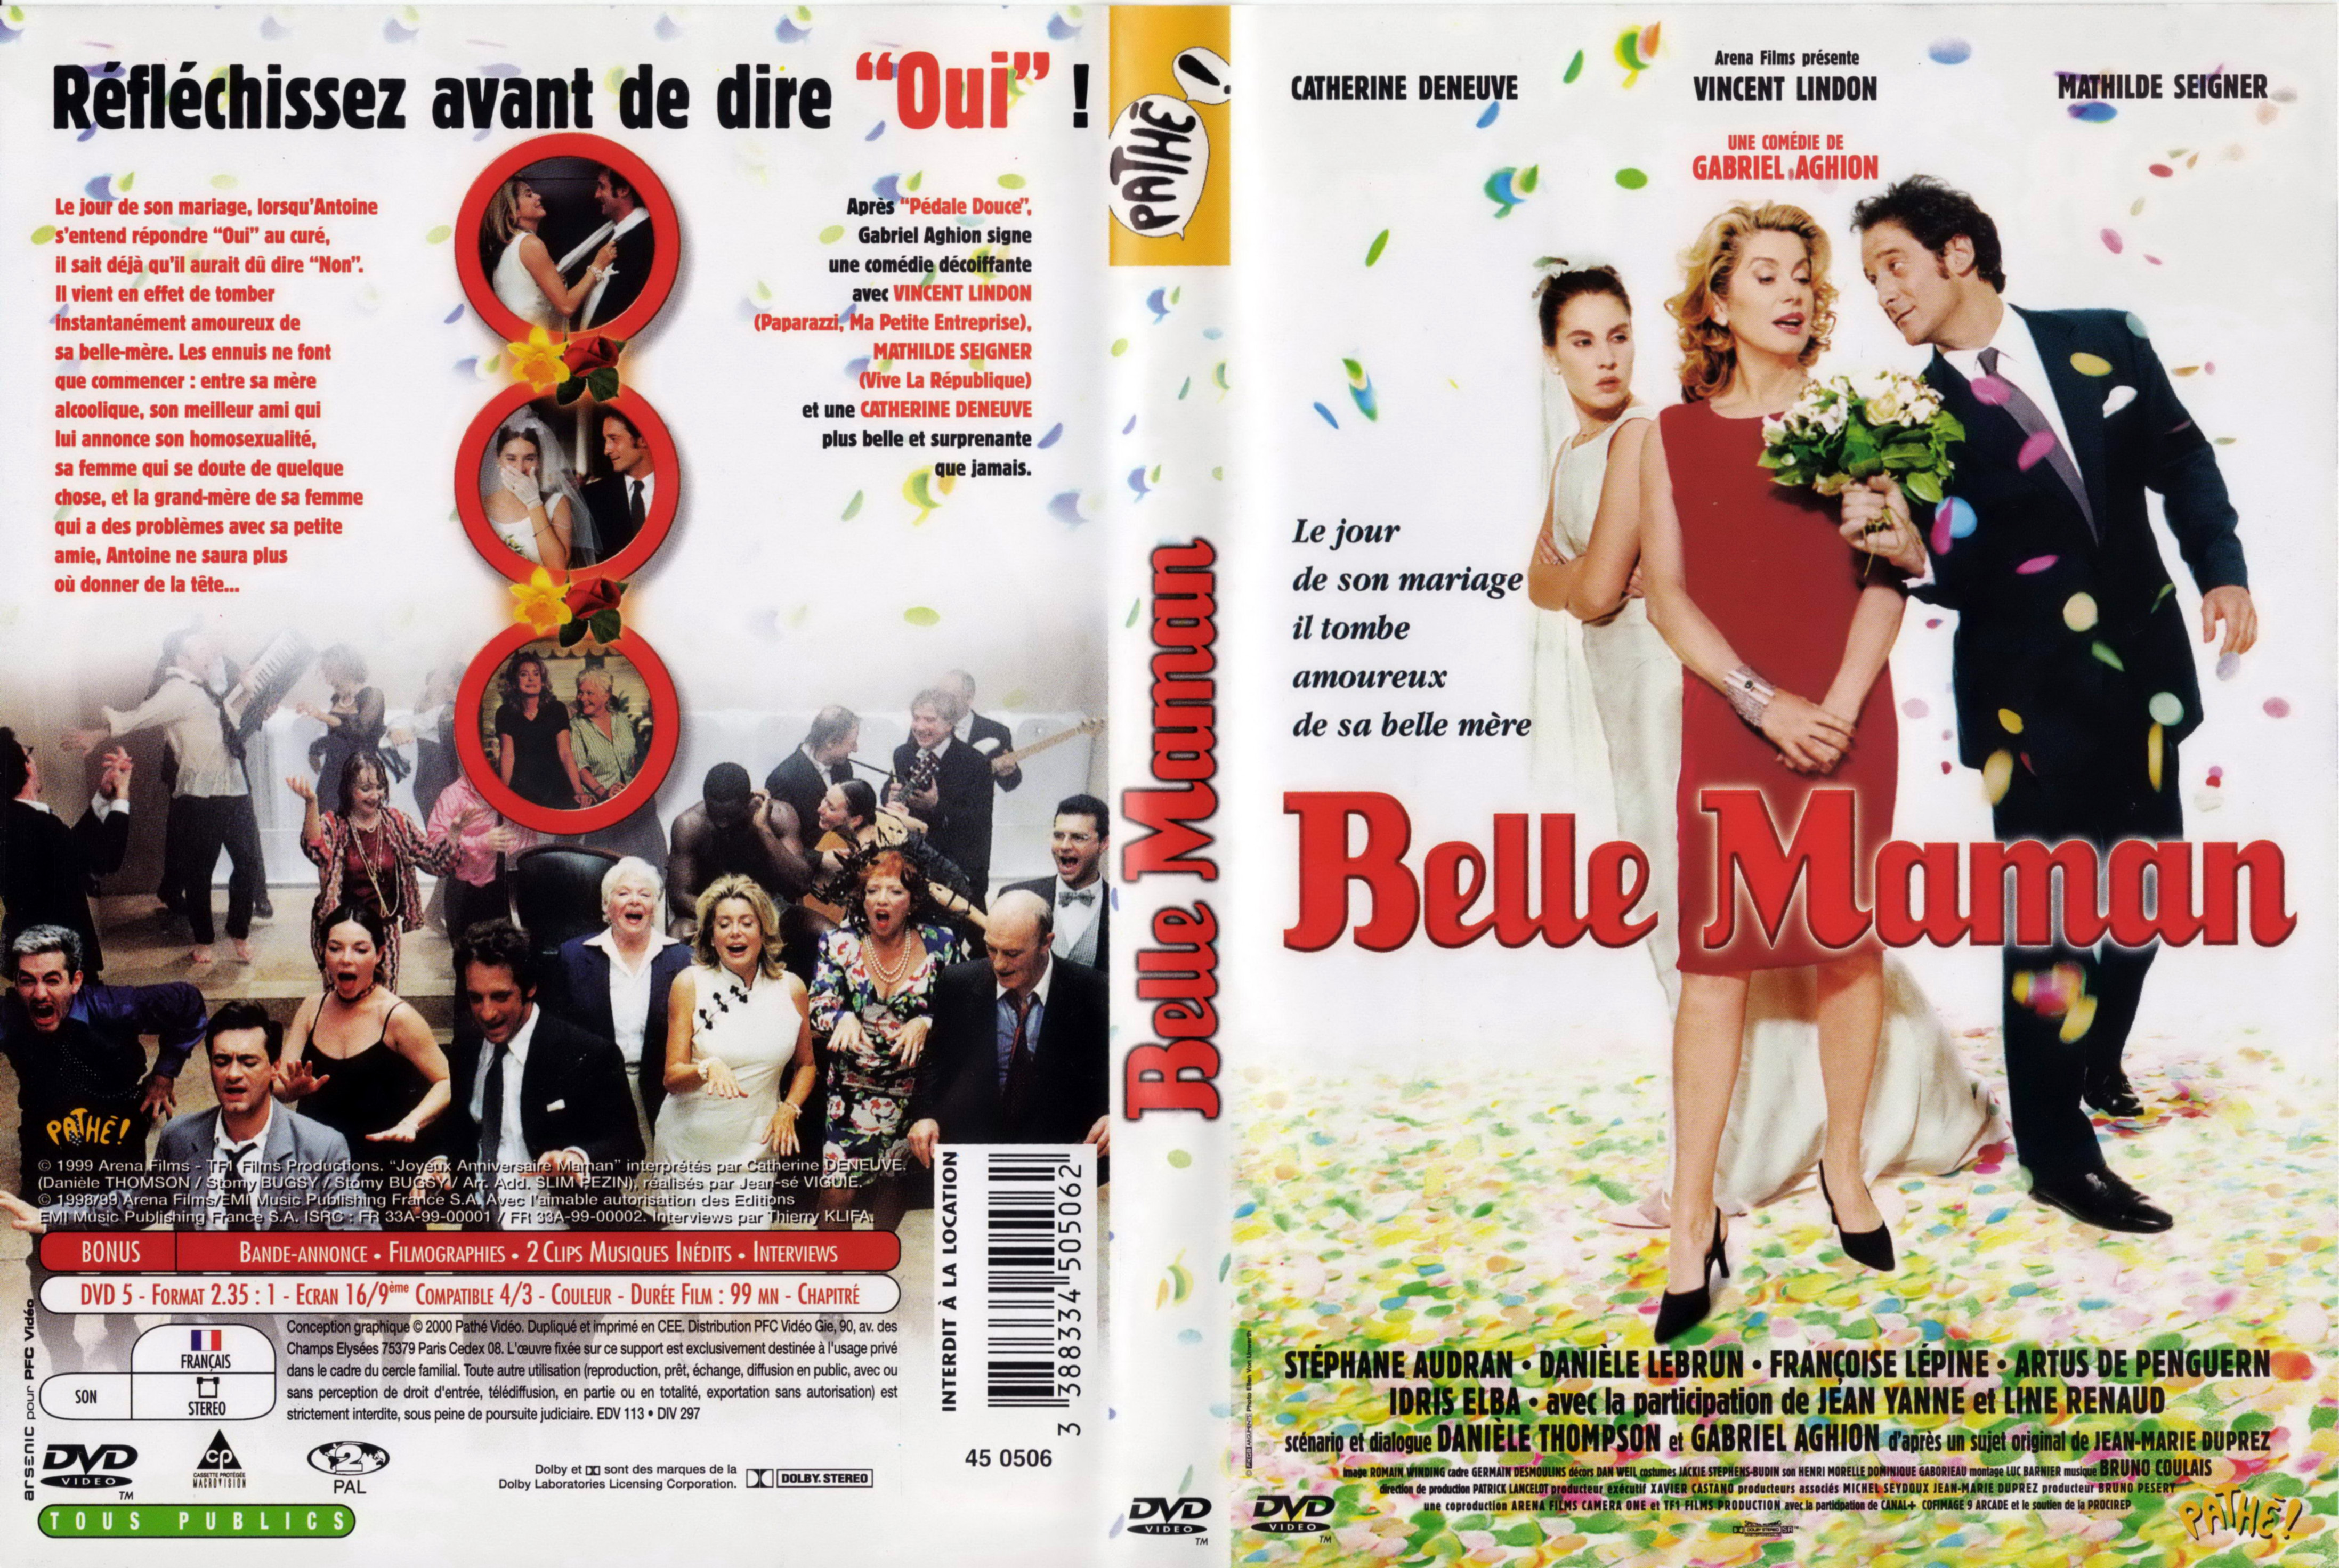 Jaquette DVD Belle maman